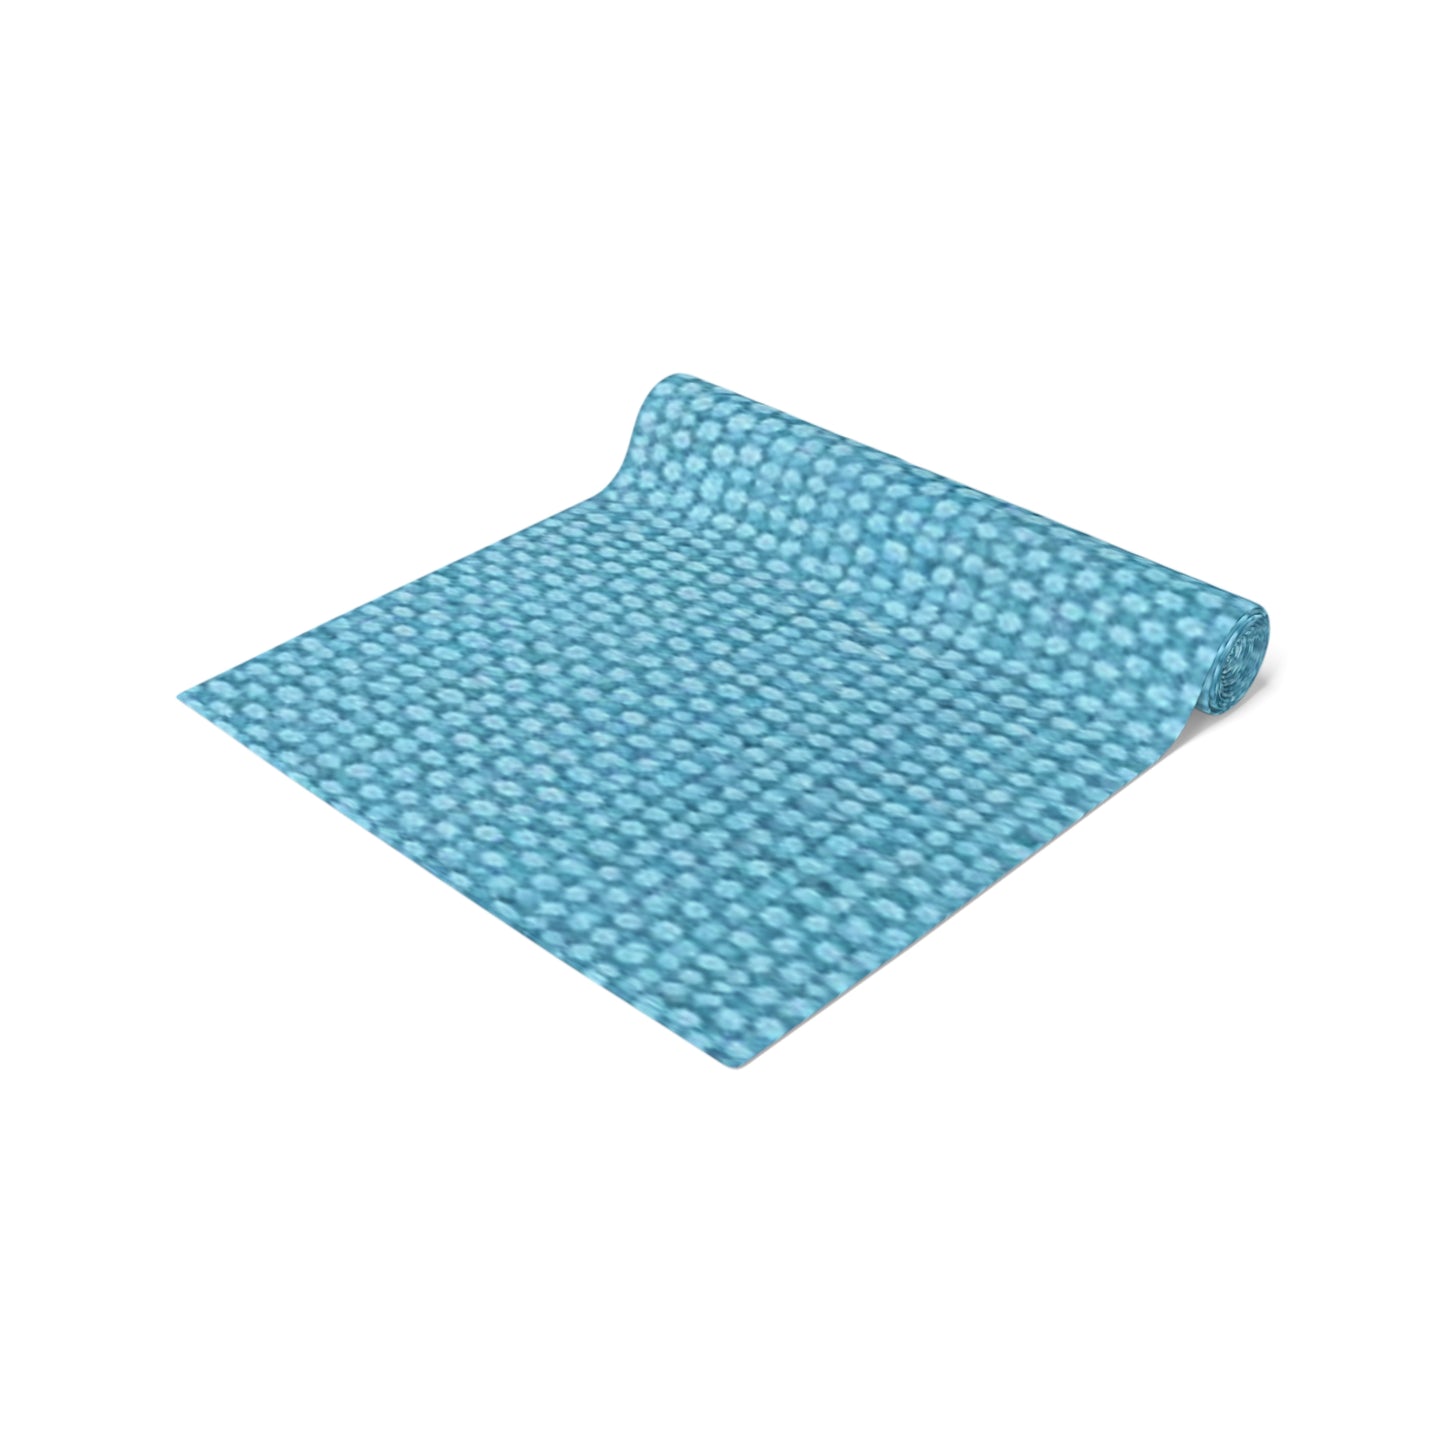 Bright Aqua Teal: Denim-Inspired Refreshing Blue Summer Fabric - Table Runner (Cotton, Poly)